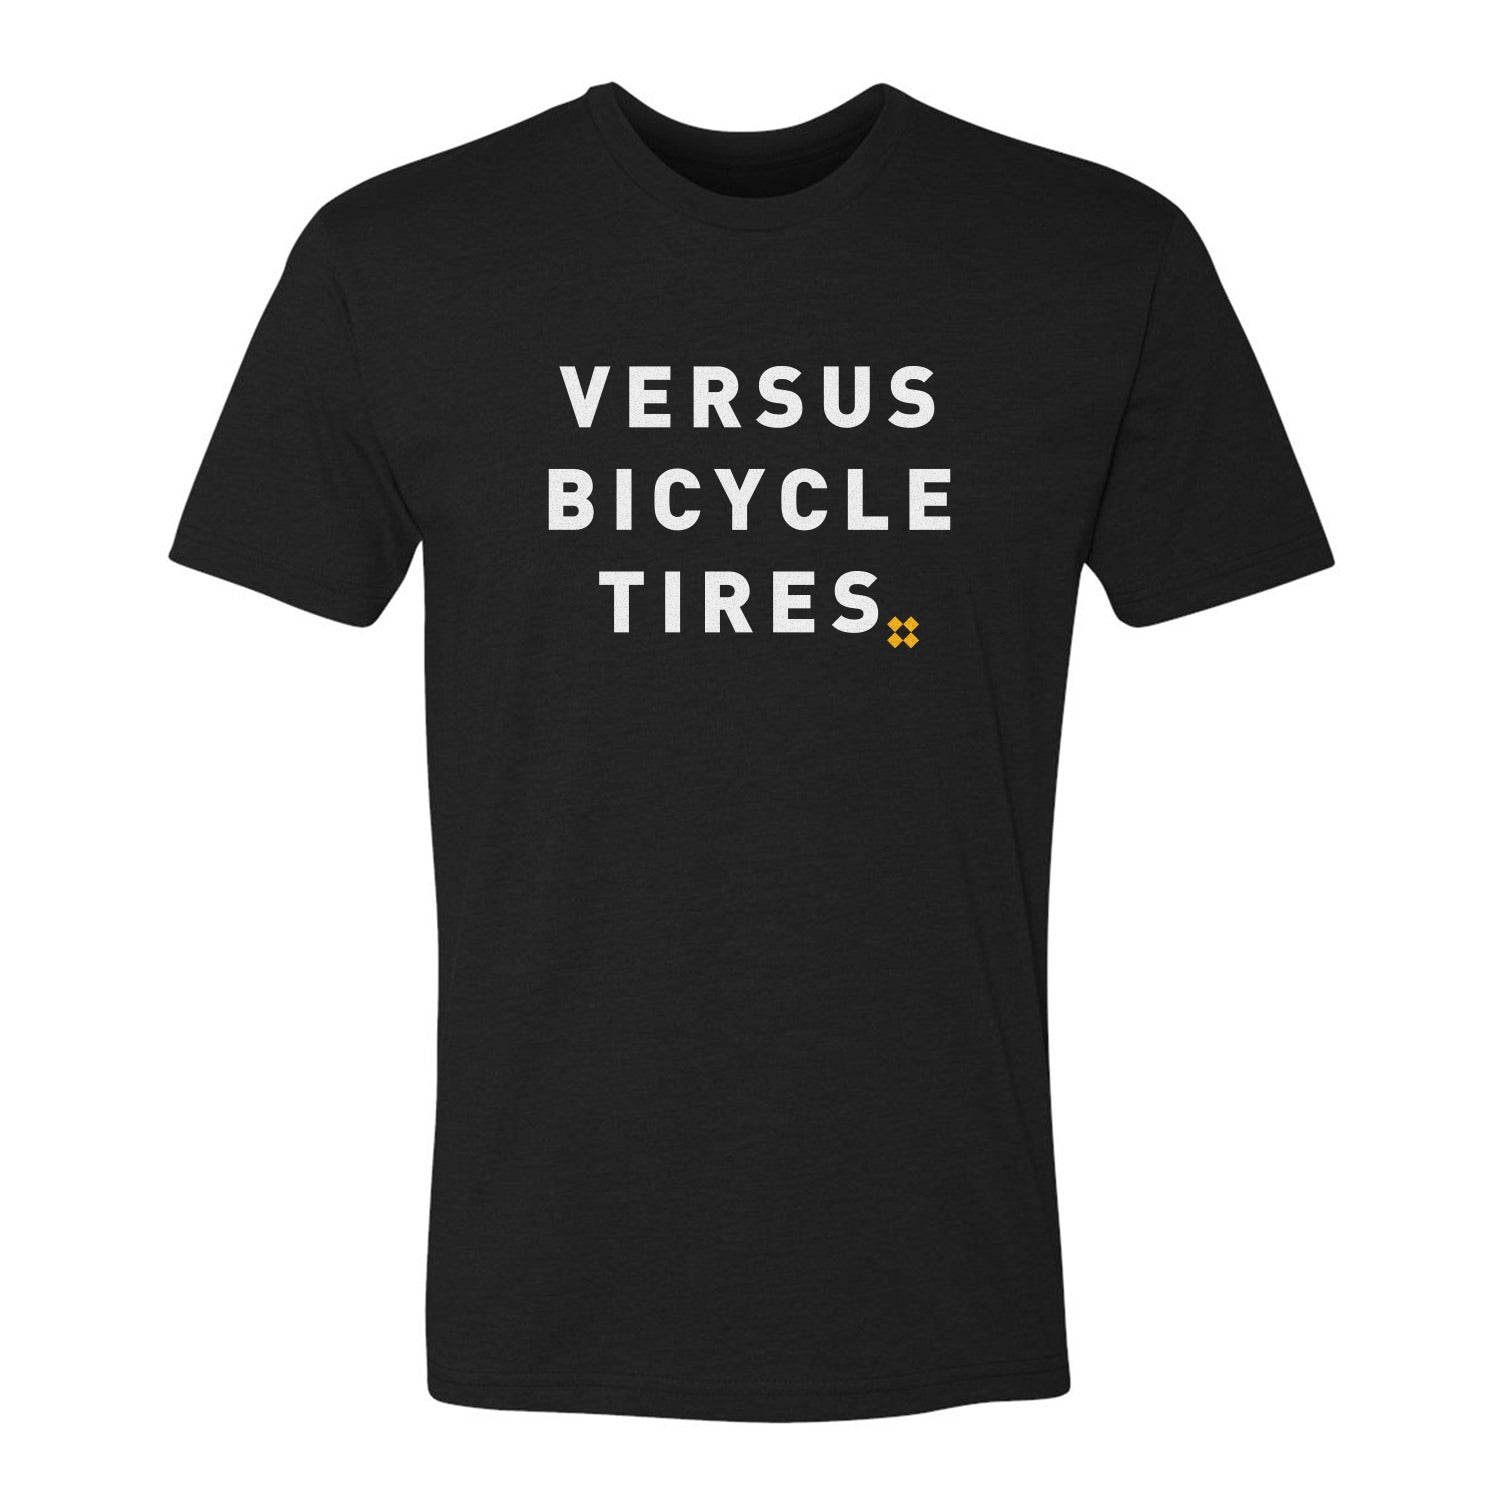 Versus Tires Text t-shirt in black colorway